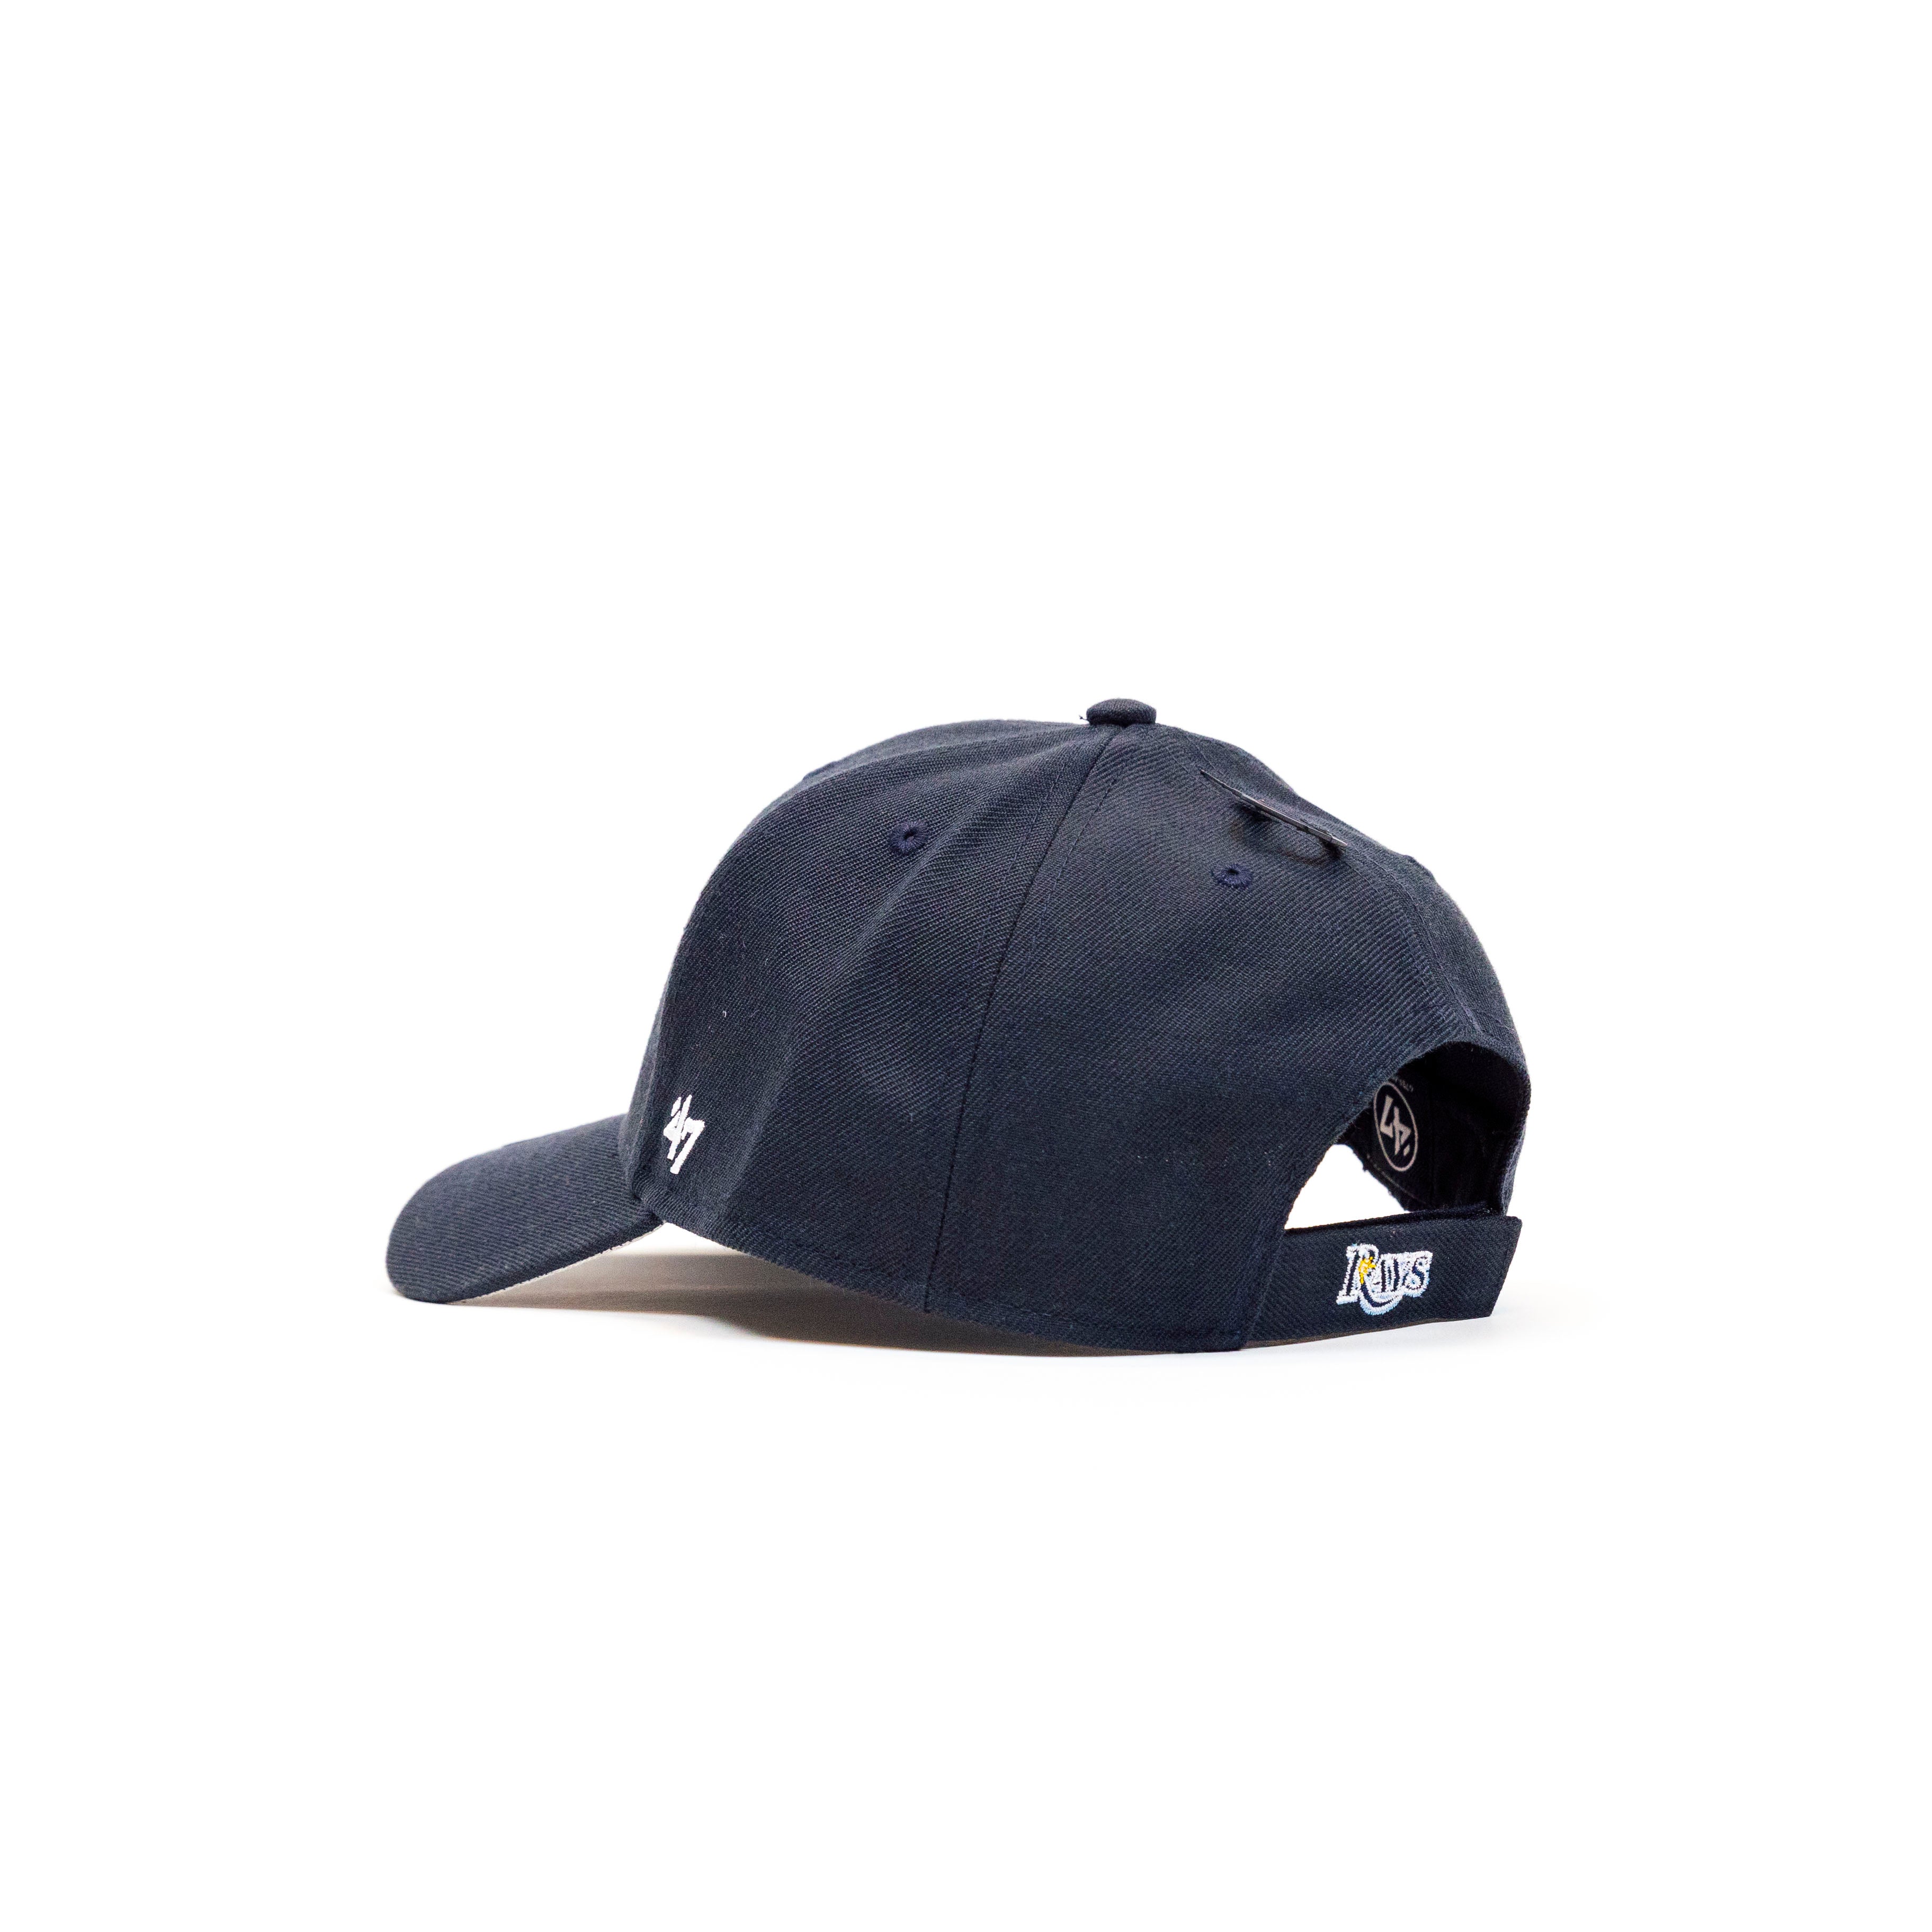 Rays Home '47 MVP hat